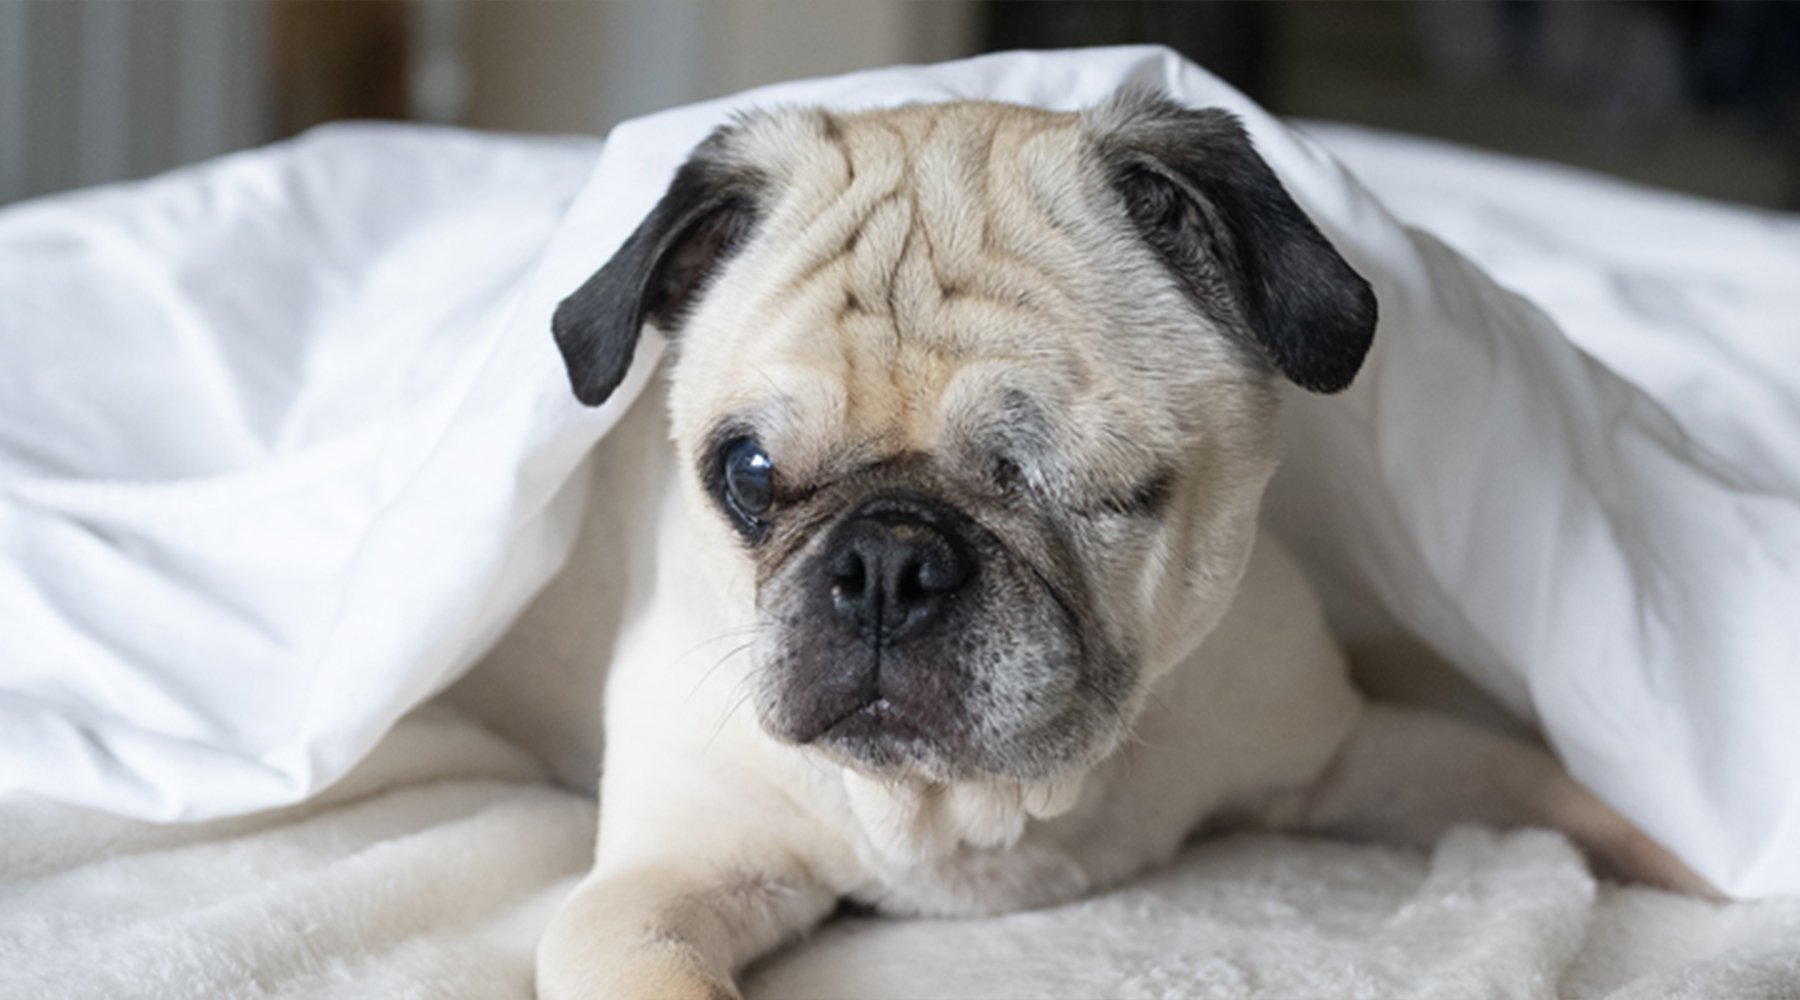 Jax the one-eyed pug nestles beneath a blanket